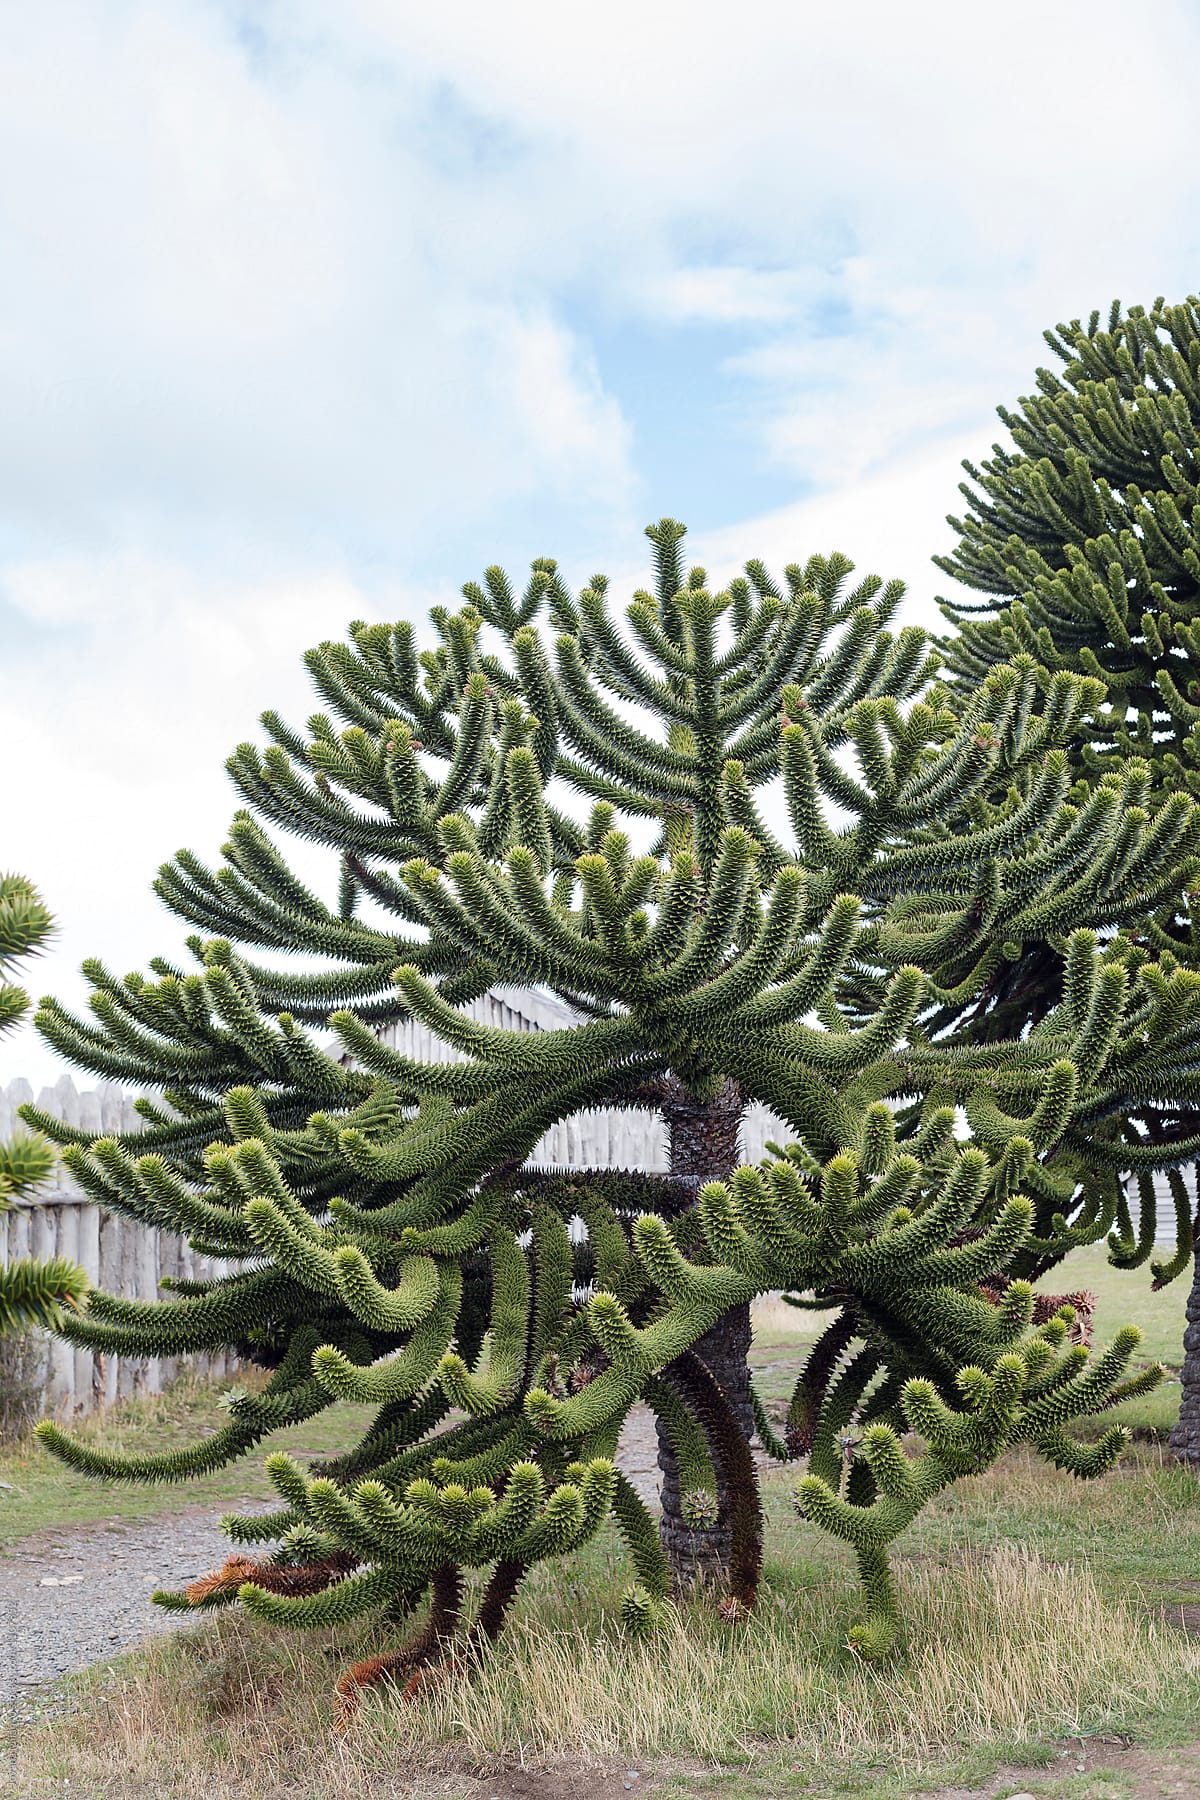 The living fosil Araucaria tree in Patagonia